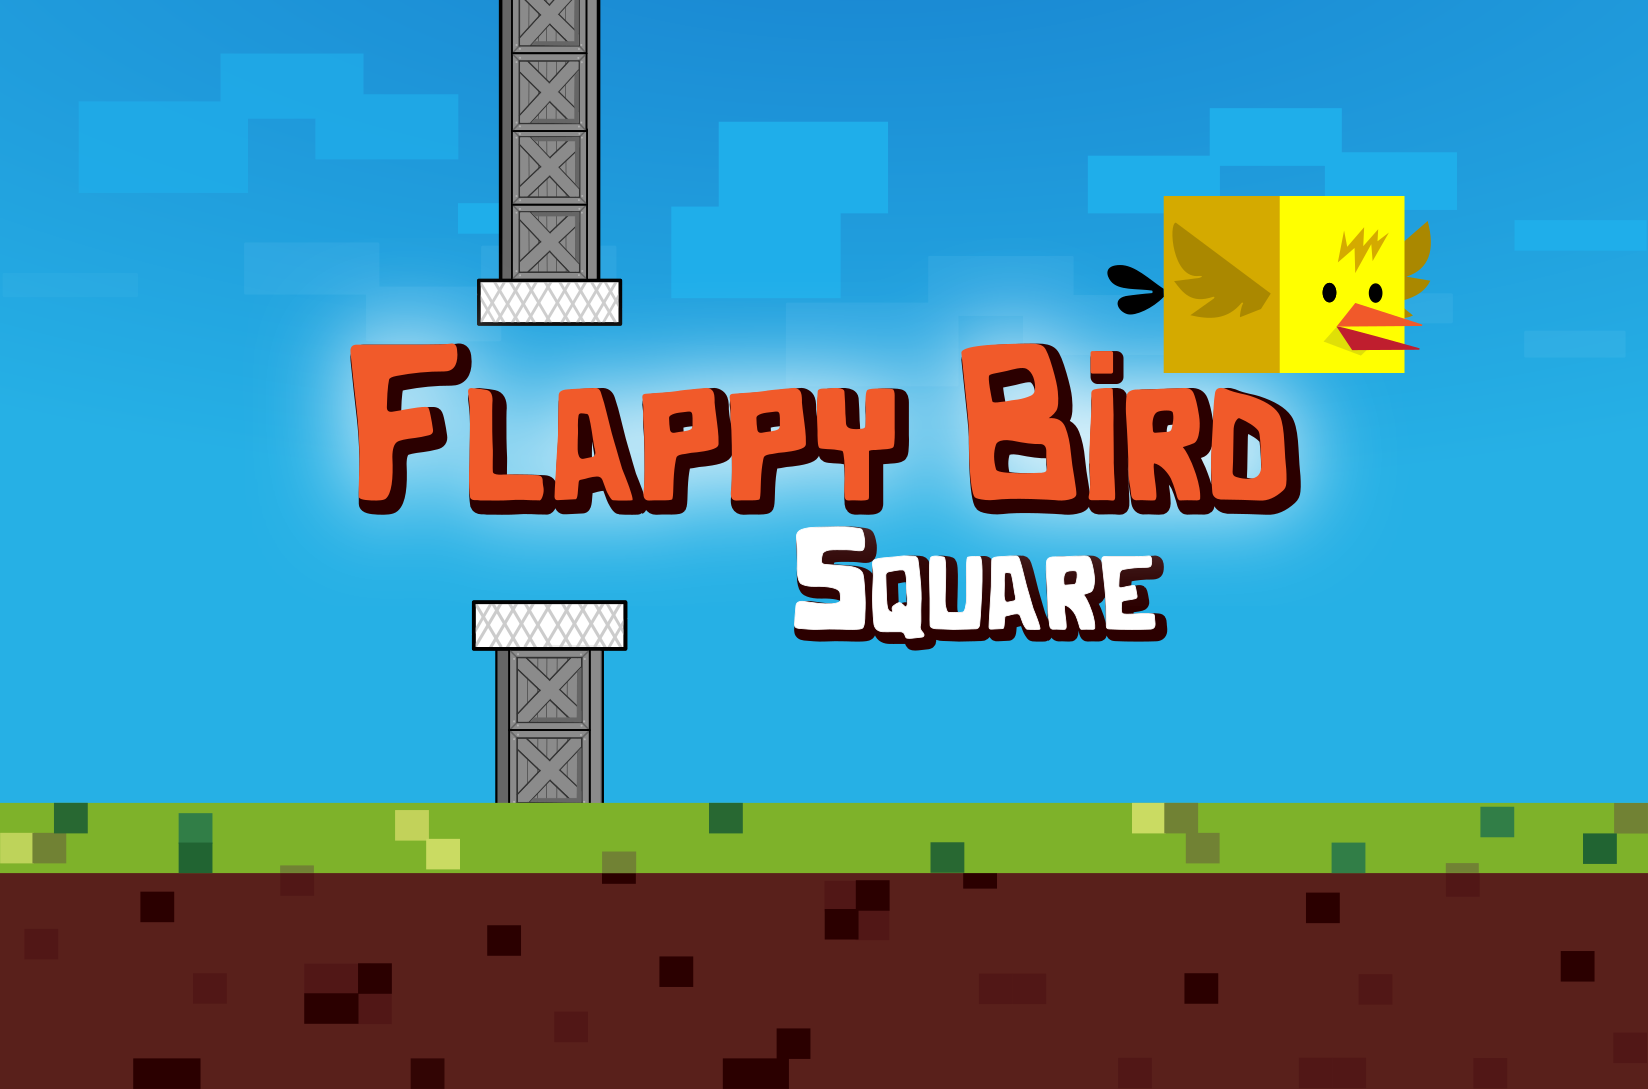 Flappy Bird Square